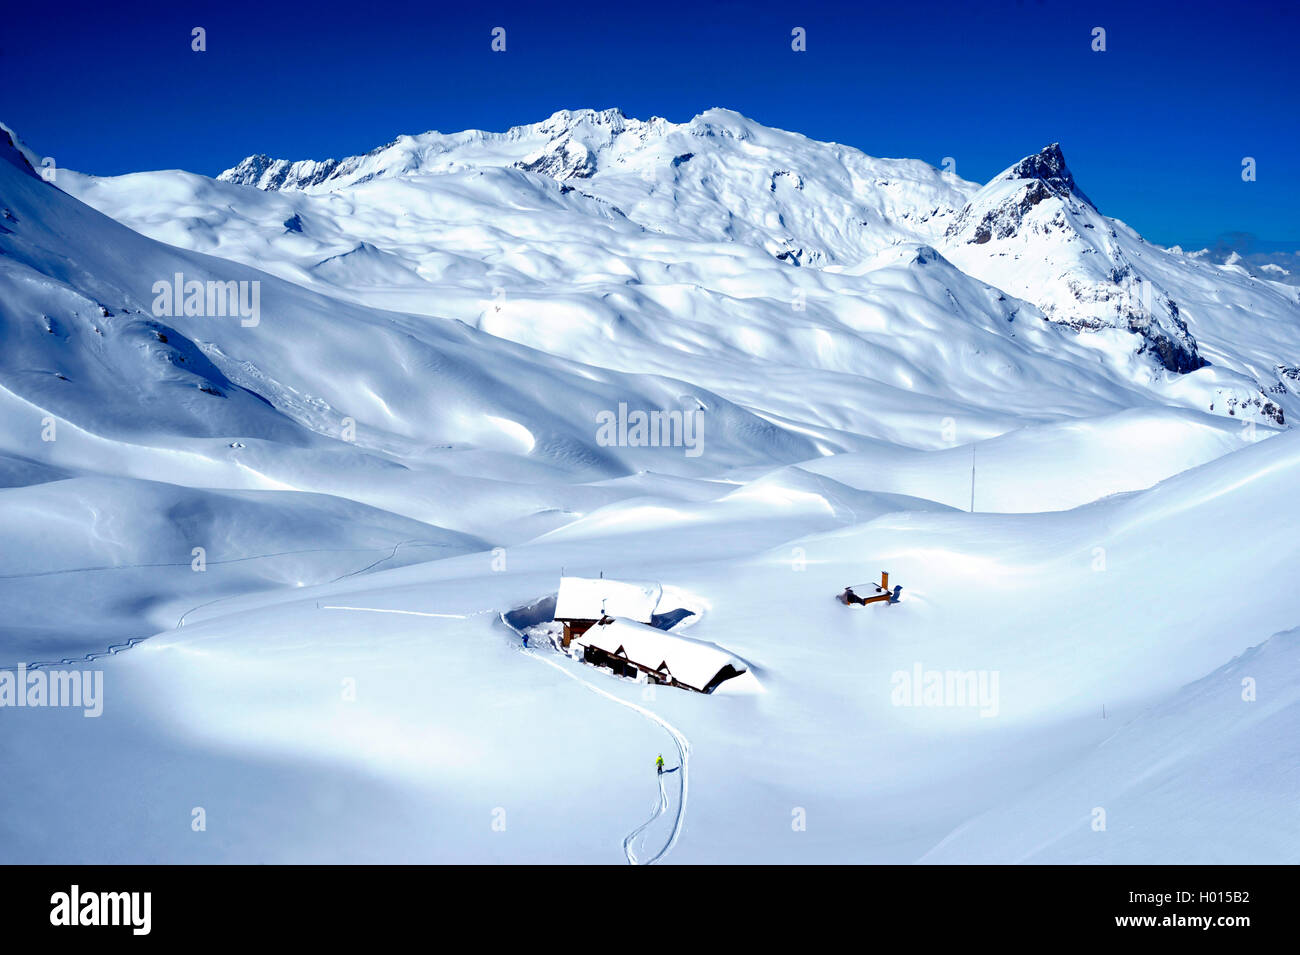 Skiwanderer auf dem Weg zur Berghuette am Bergpass Palet, Frankreich, Savoie, Vanoise Nationalpark | ski wanderer near the refug Stock Photo